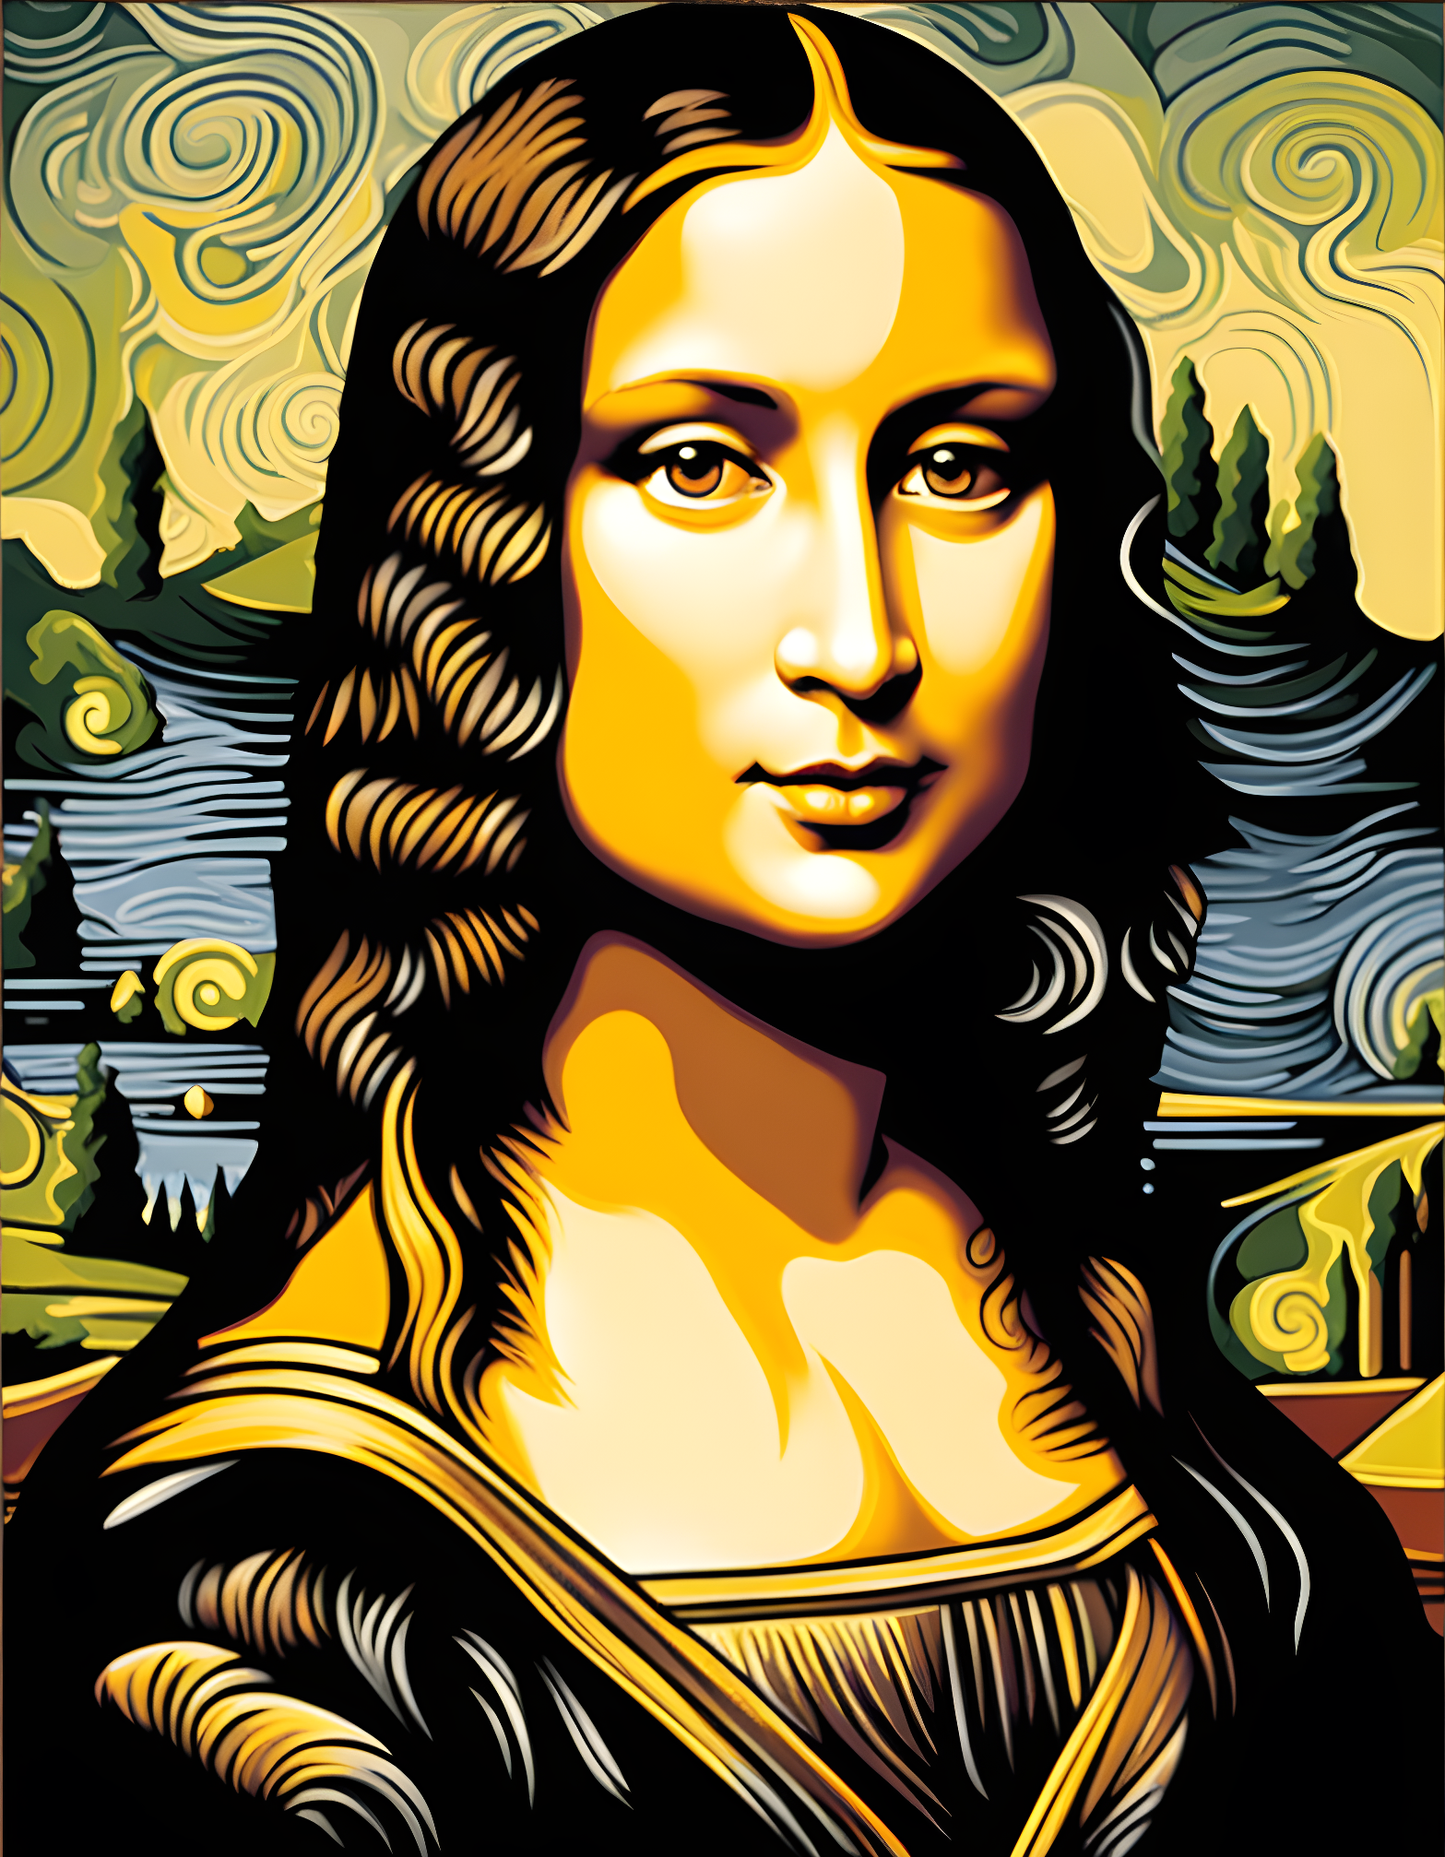 Mona Lisa by Leonardo da Vinci Collection PD (10) - Van-Go Paint-By-Number Kit